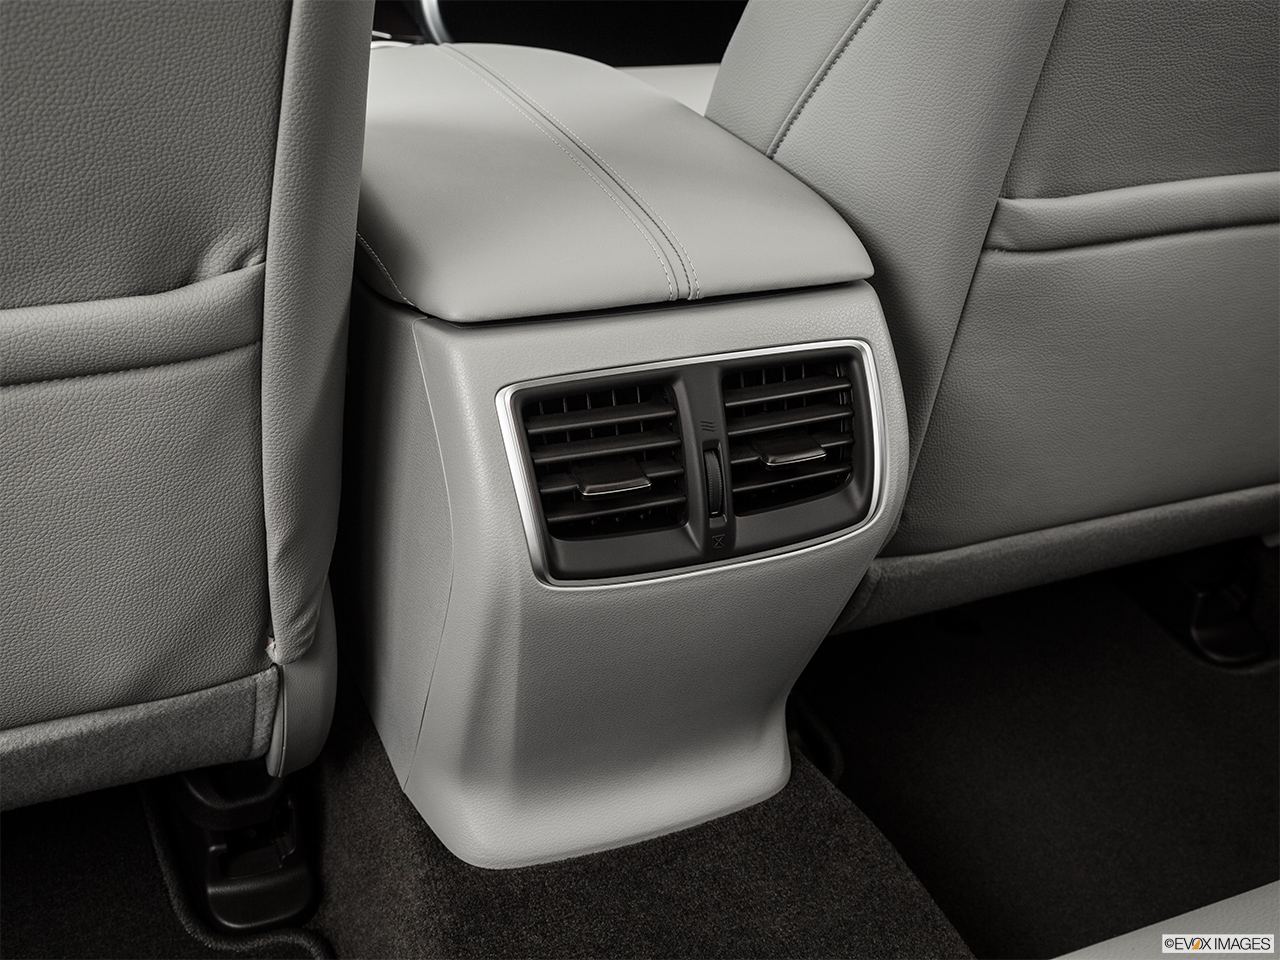 2016 Acura TLX 3.5 V-6 9-AT P-AWS Rear A/C controls. 